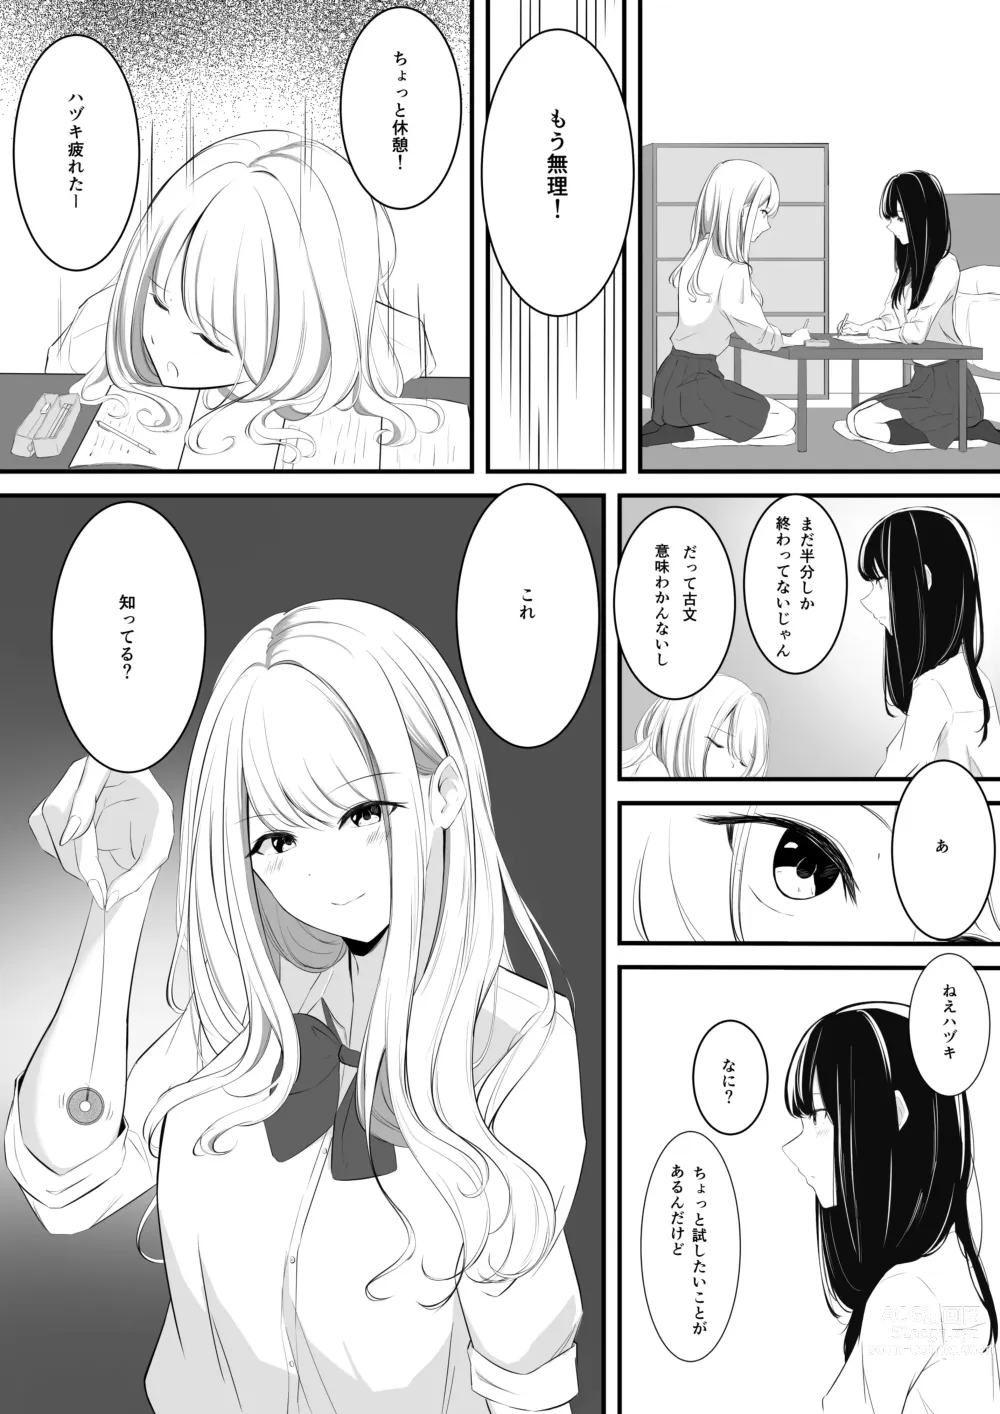 Page 1 of doujinshi Yuri comic Part 1,2 and 3.